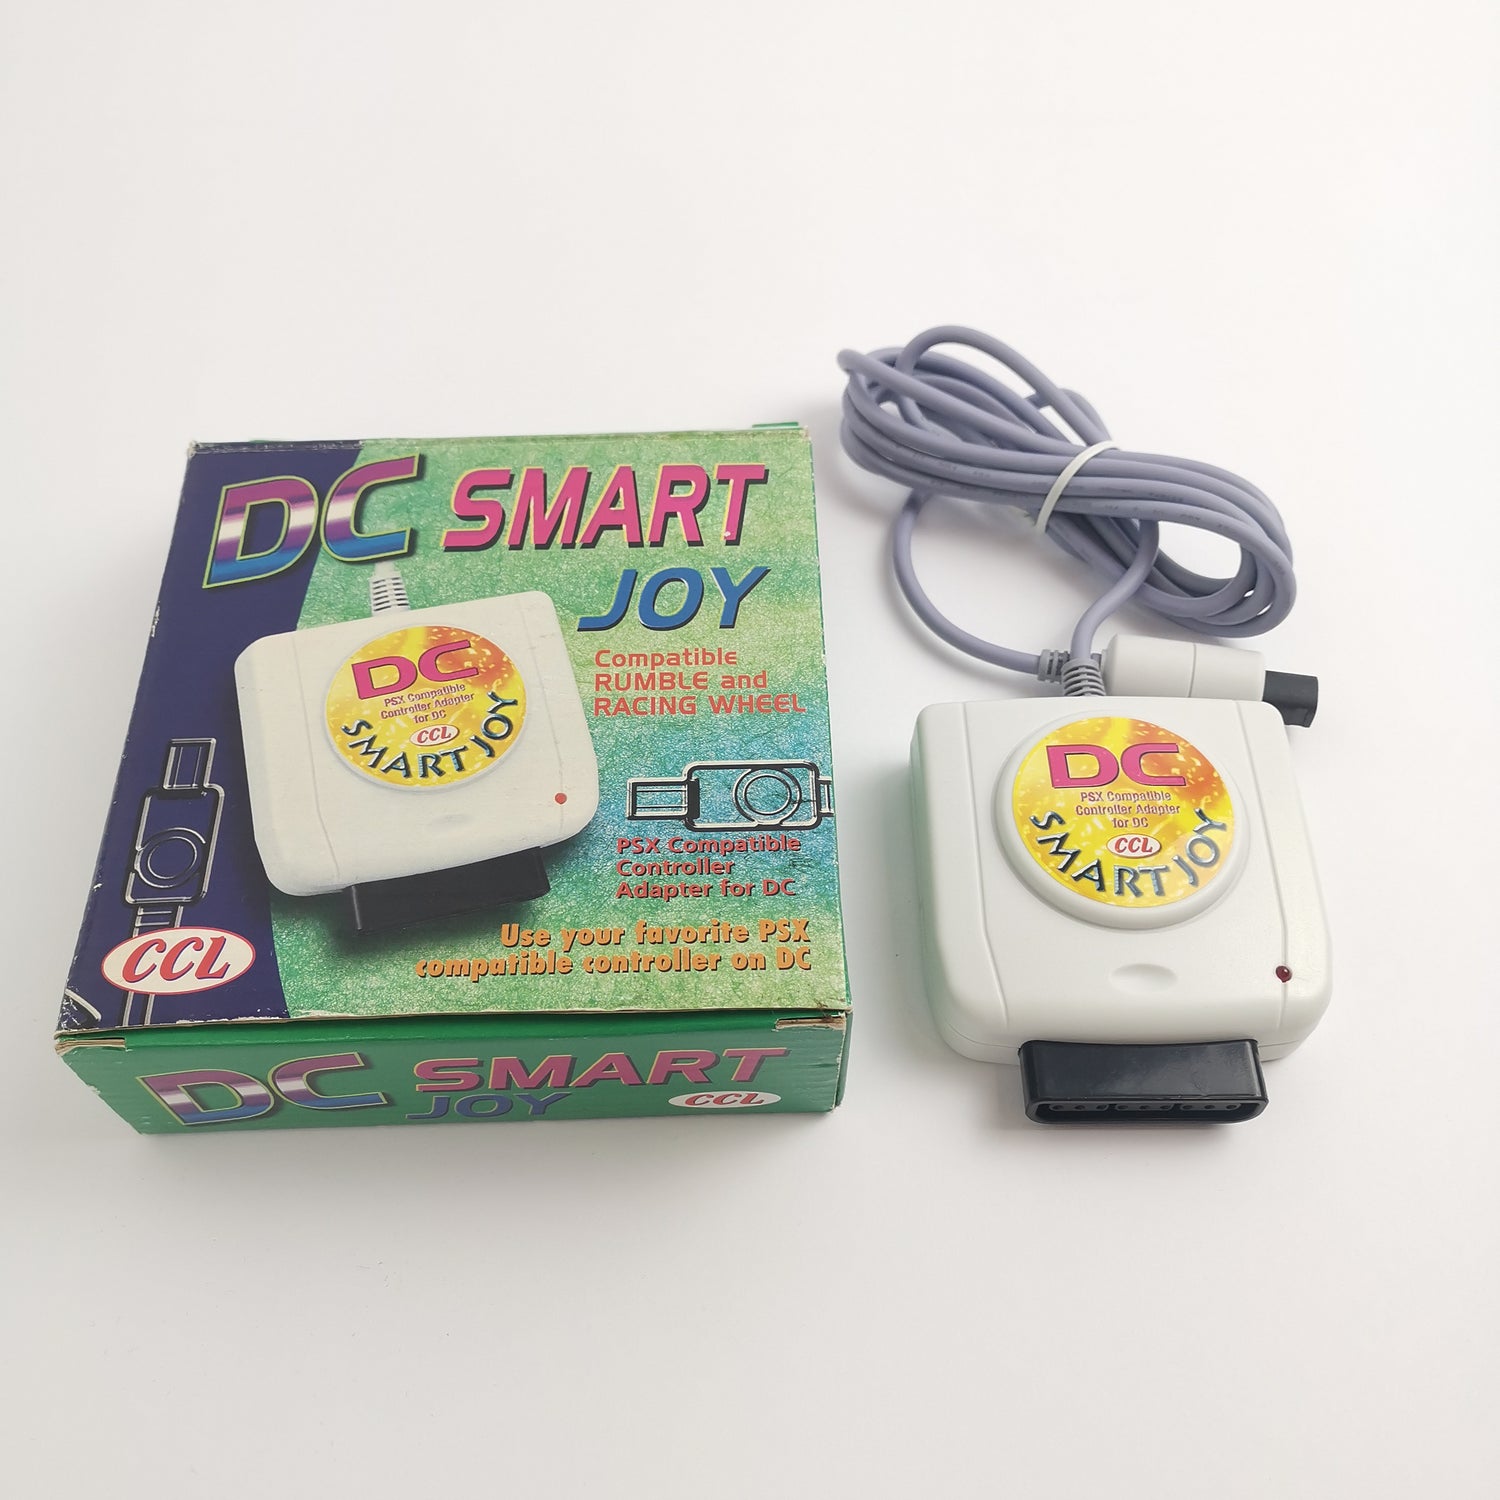 Sega Dreamcast Accessories: DC Smart Joy Adapter | Original packaging